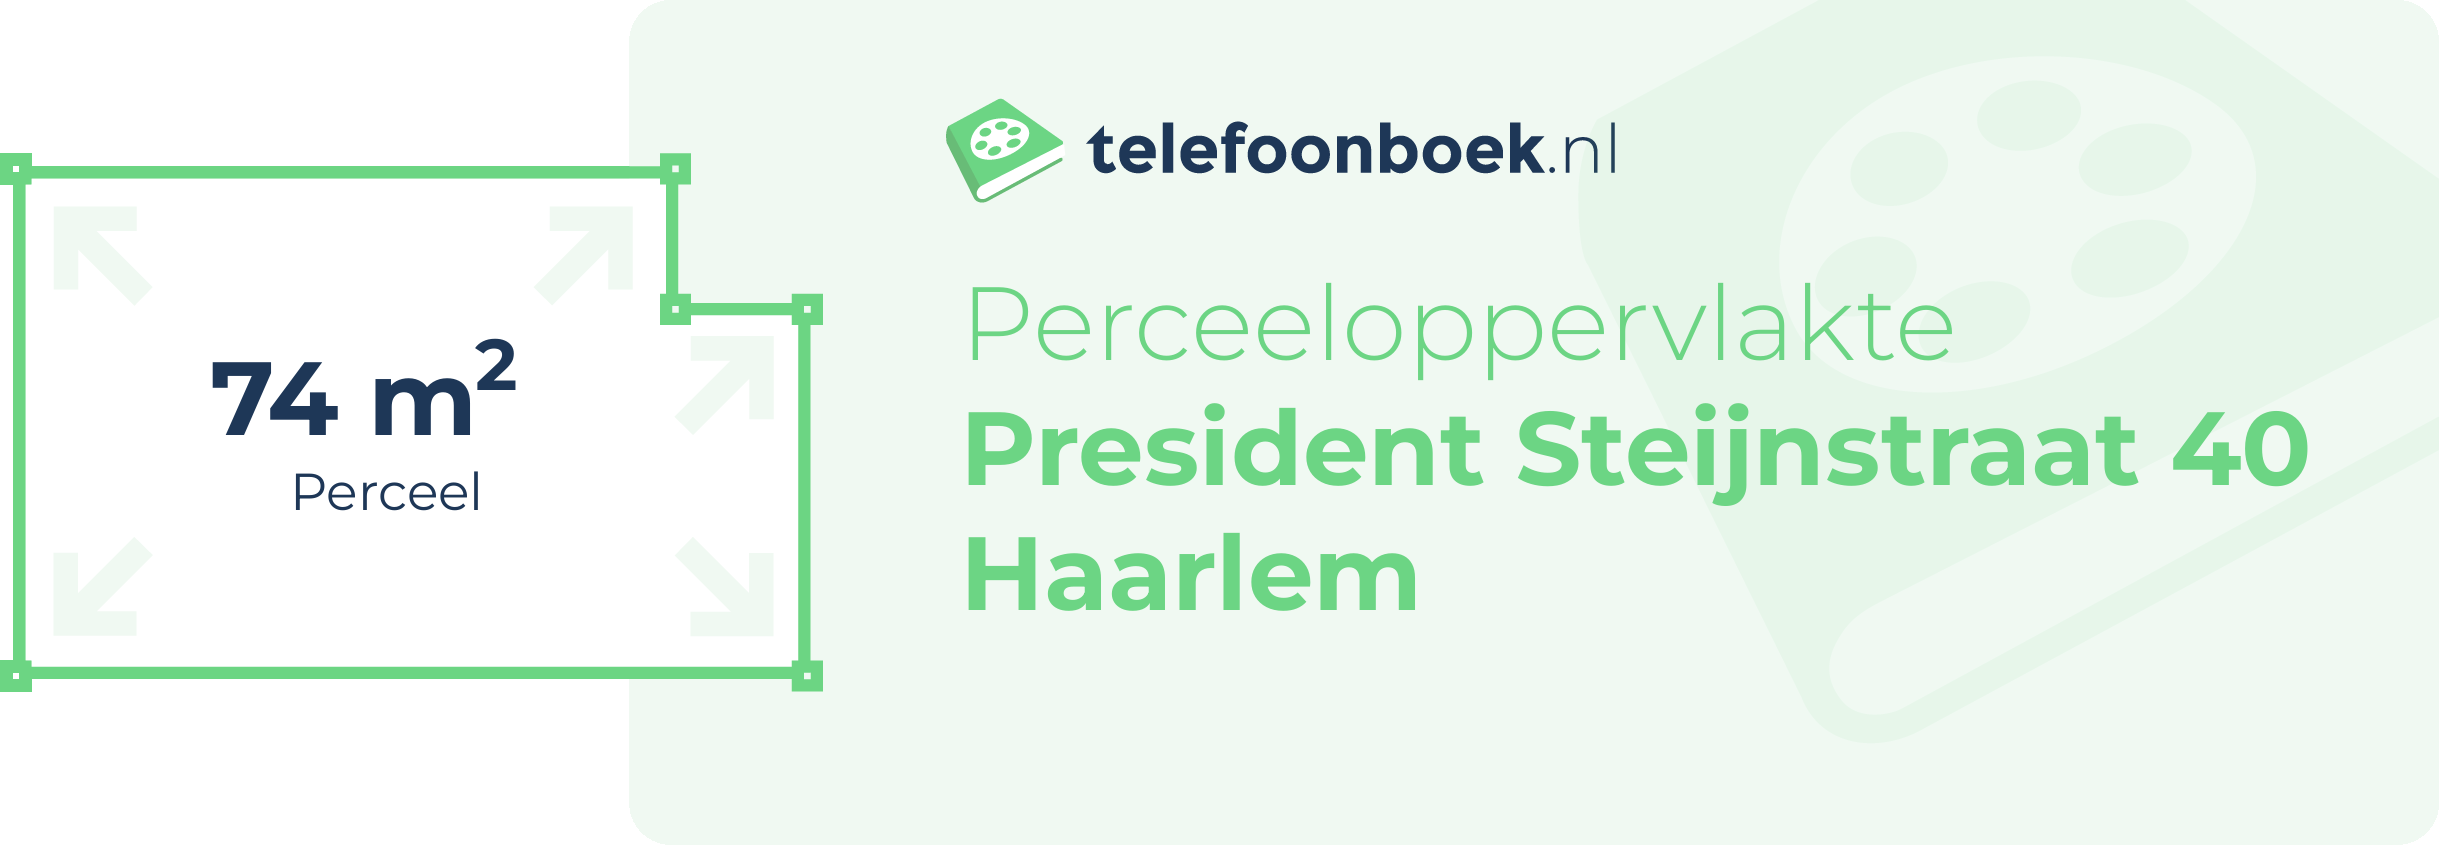 Perceeloppervlakte President Steijnstraat 40 Haarlem